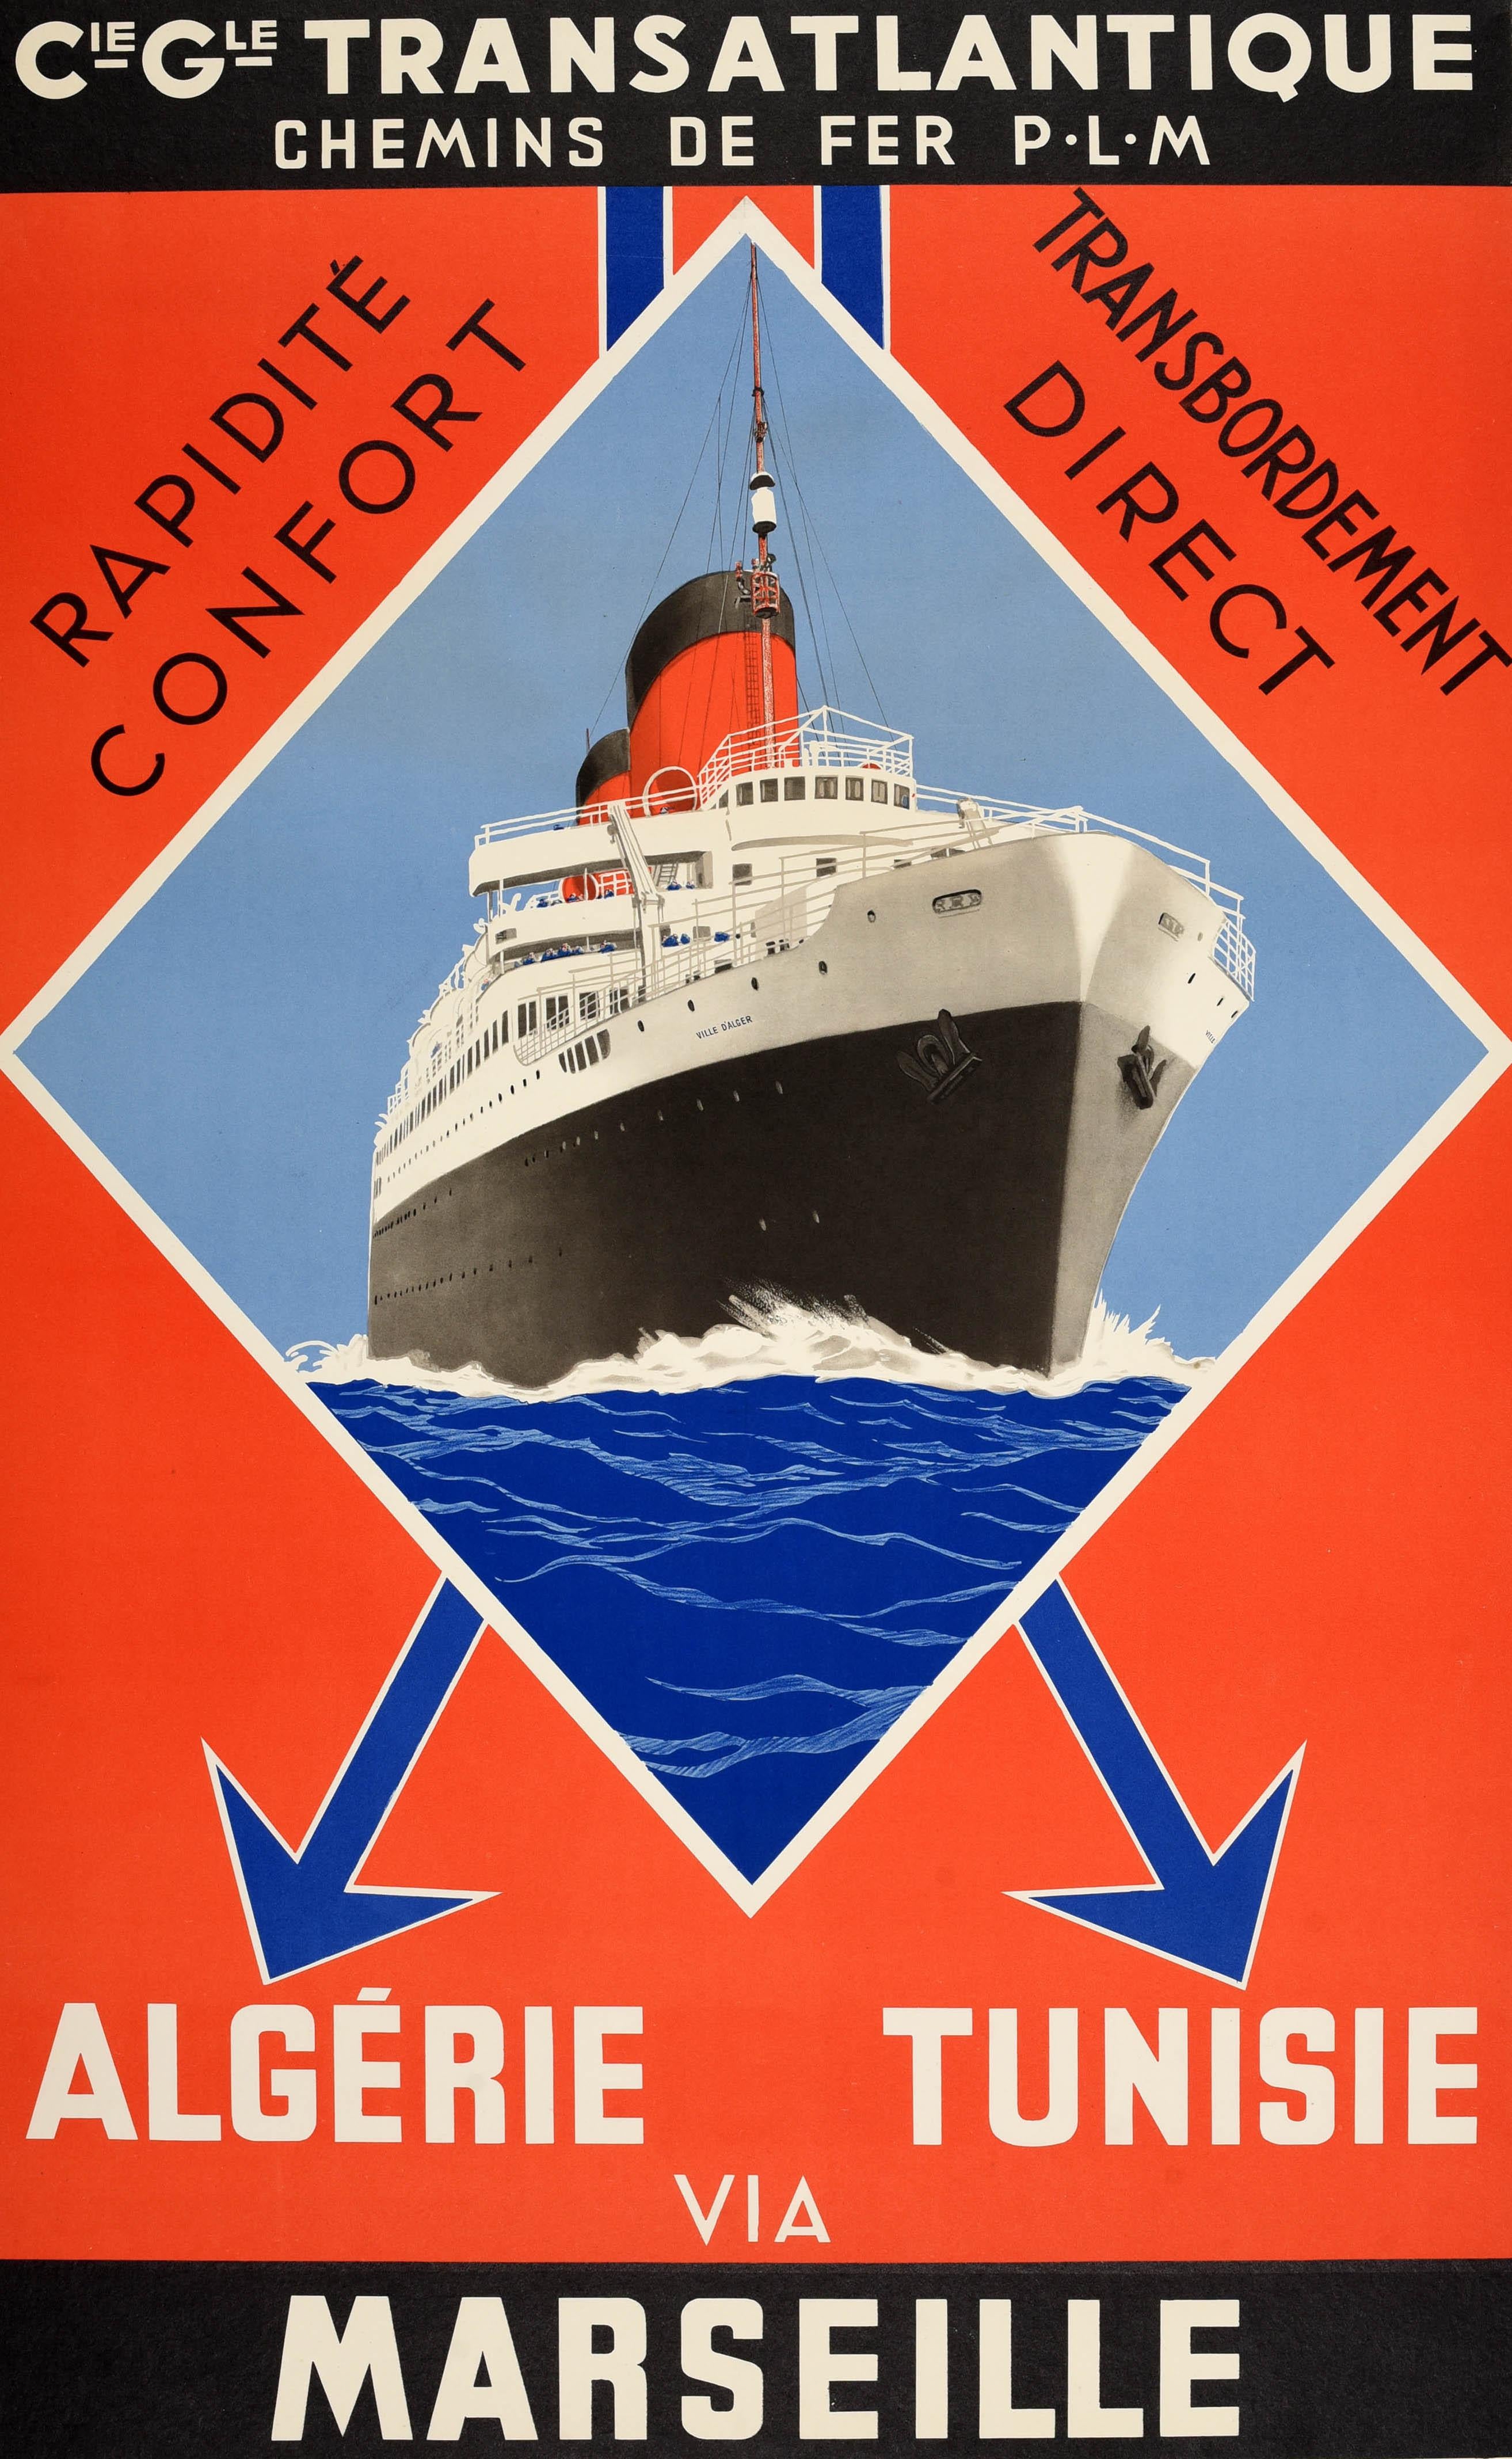 Original Vintage Travel Poster Algeria Tunisia Cie Gle Transatlantique PLM Art - Print by Unknown